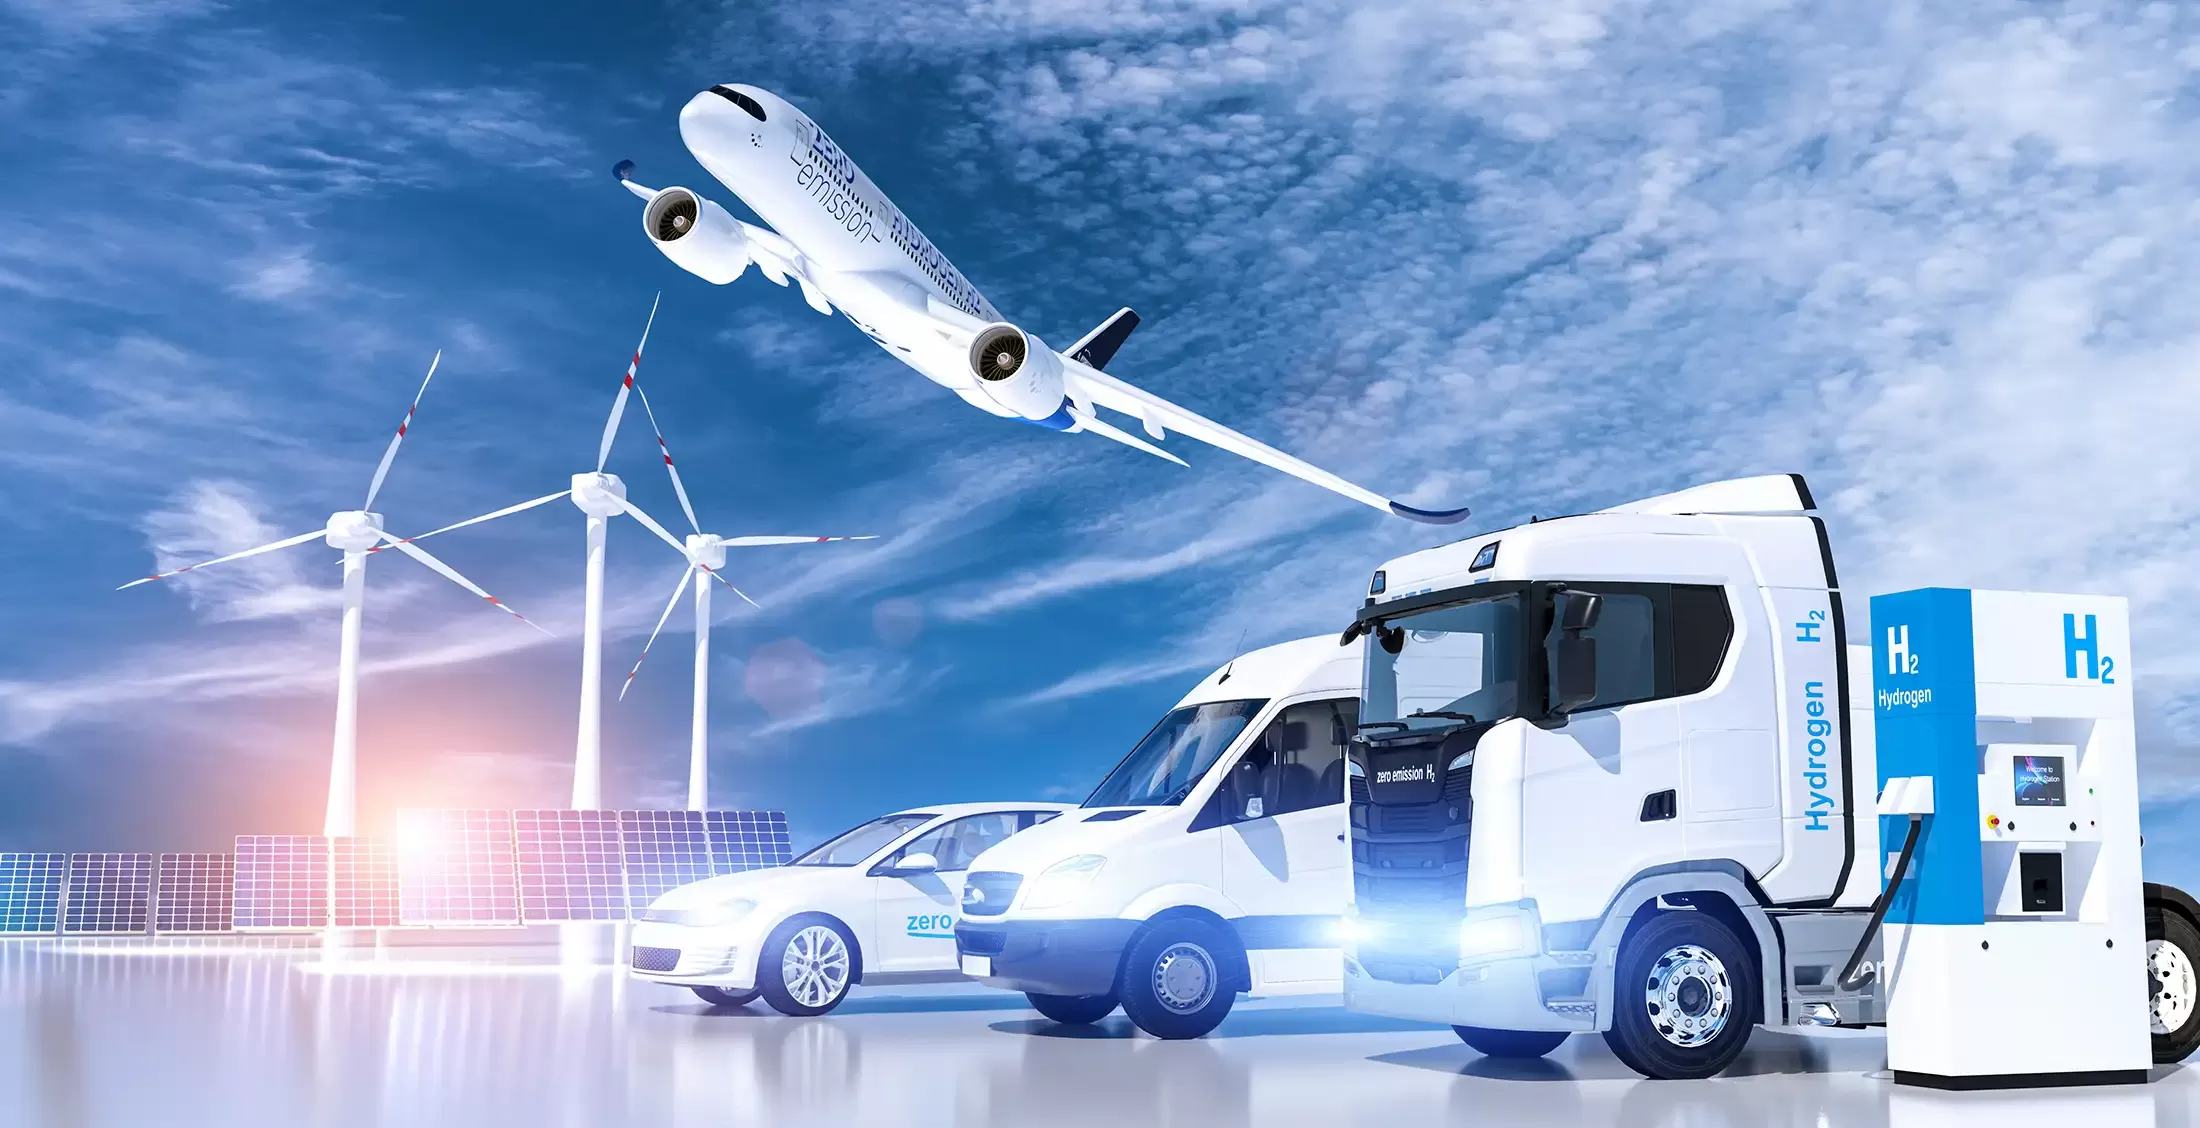 Illustration of future transportation based on hydrogen